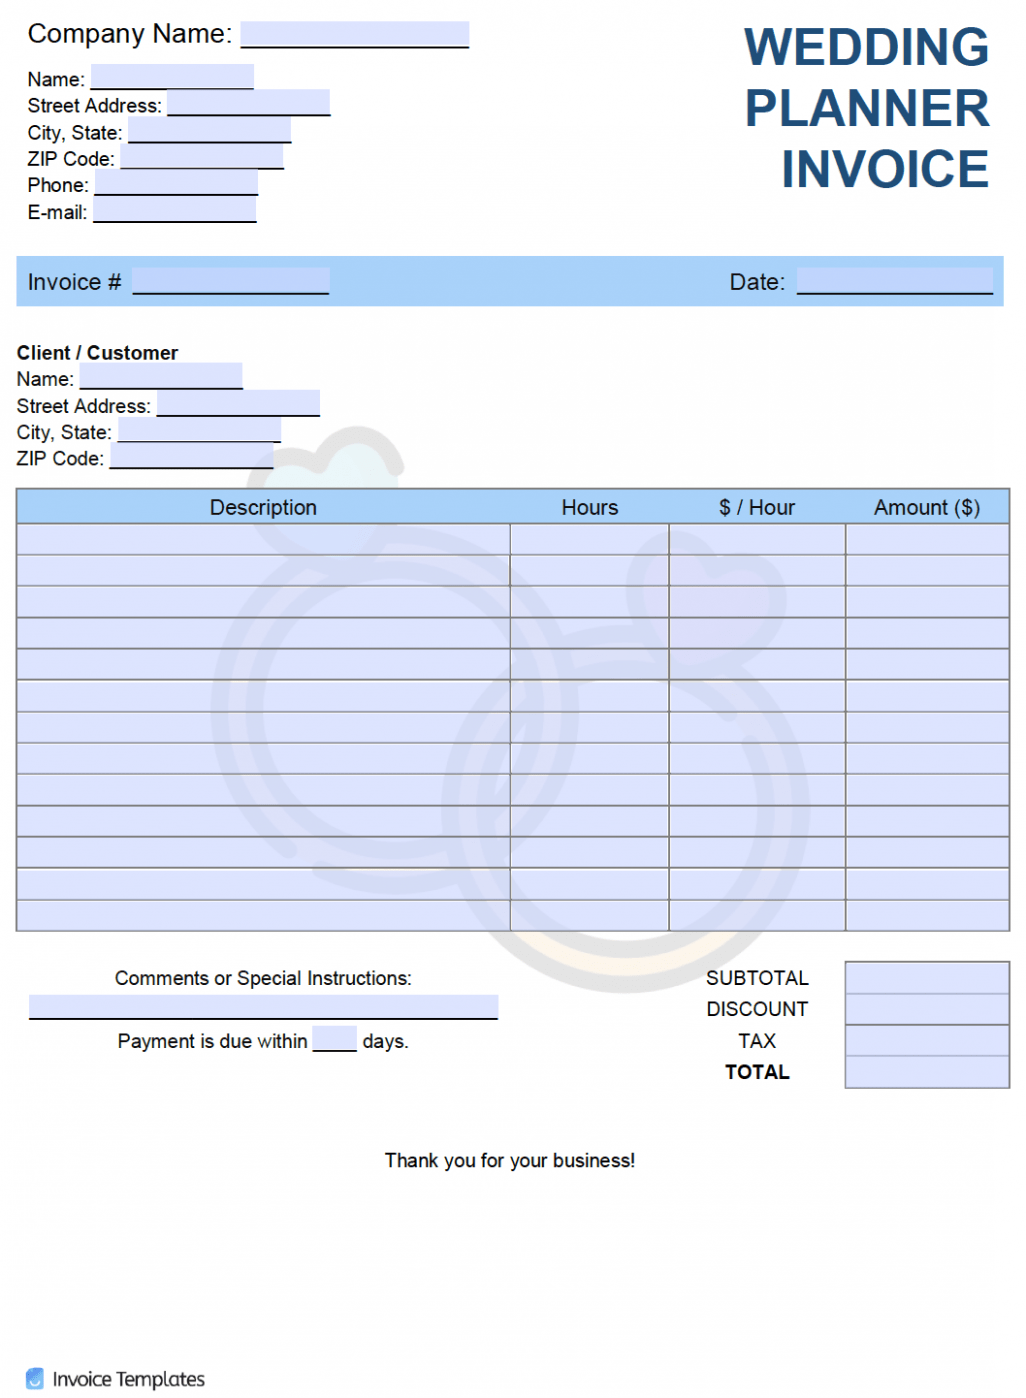 Editable Wedding Planner Invoice Template Excel